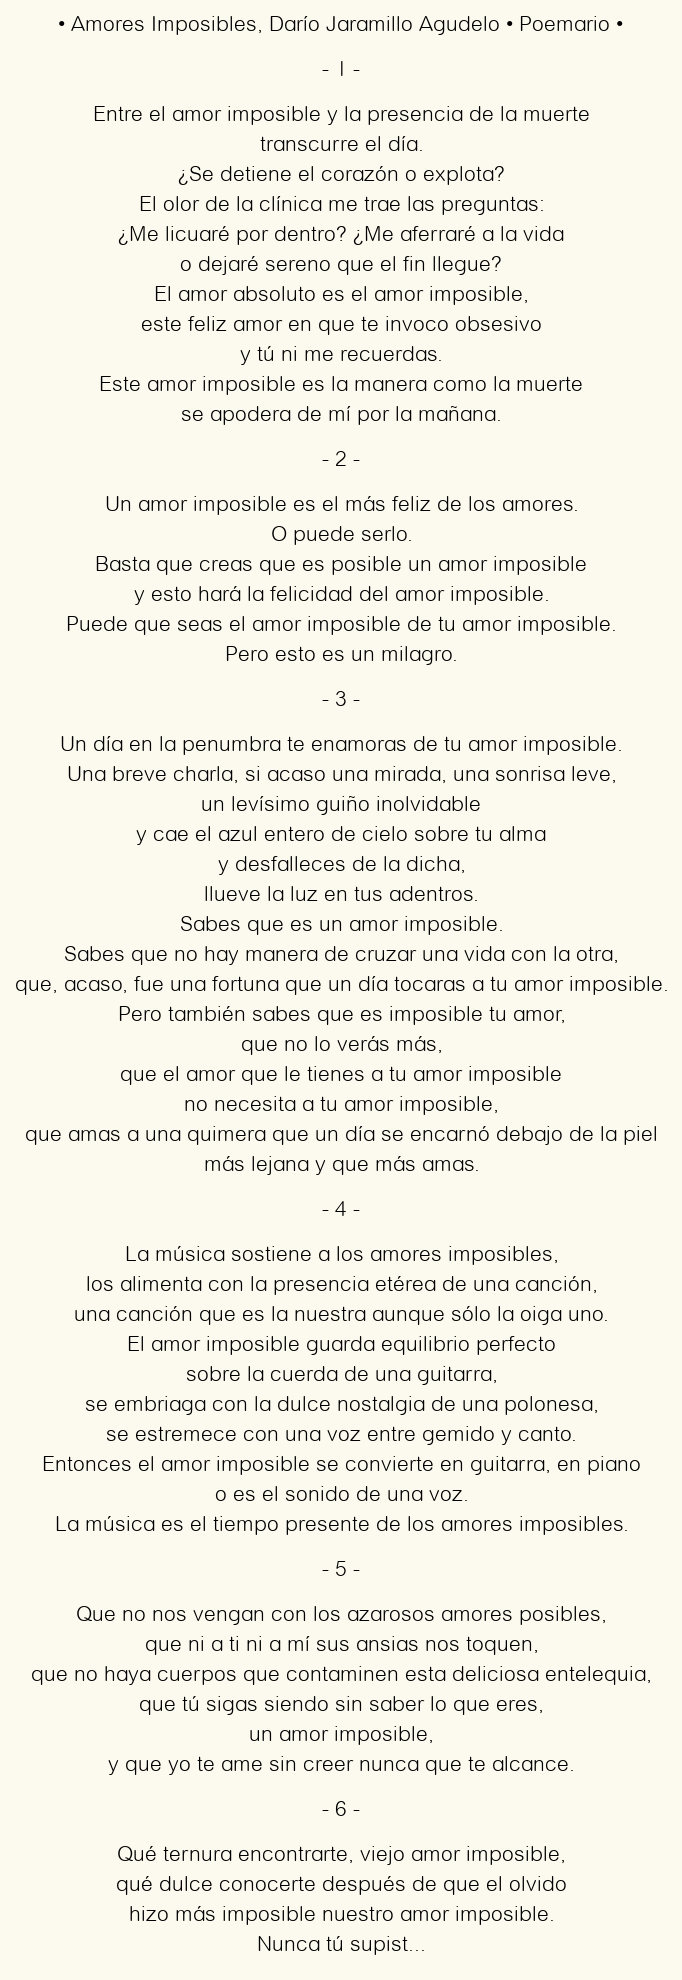 Amores Imposibles, por Darío Jaramillo Agudelo